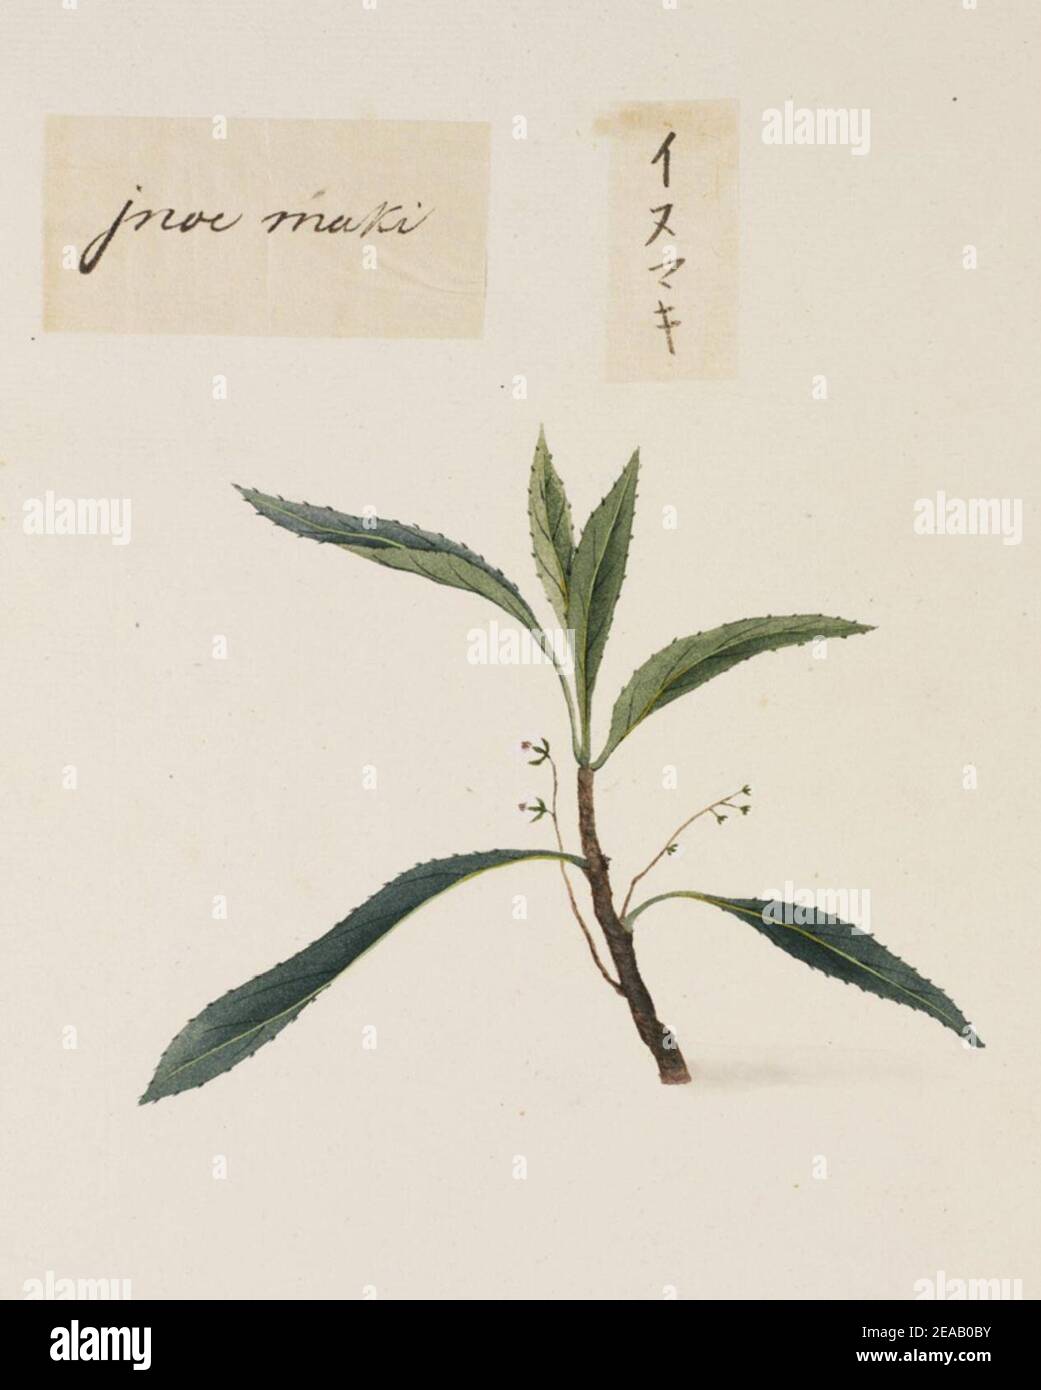 .811 - Podocarpus macrophyllus - Kawahara Keiga - 1823 - 1829 - pencil drawing - water colour. Stock Photo